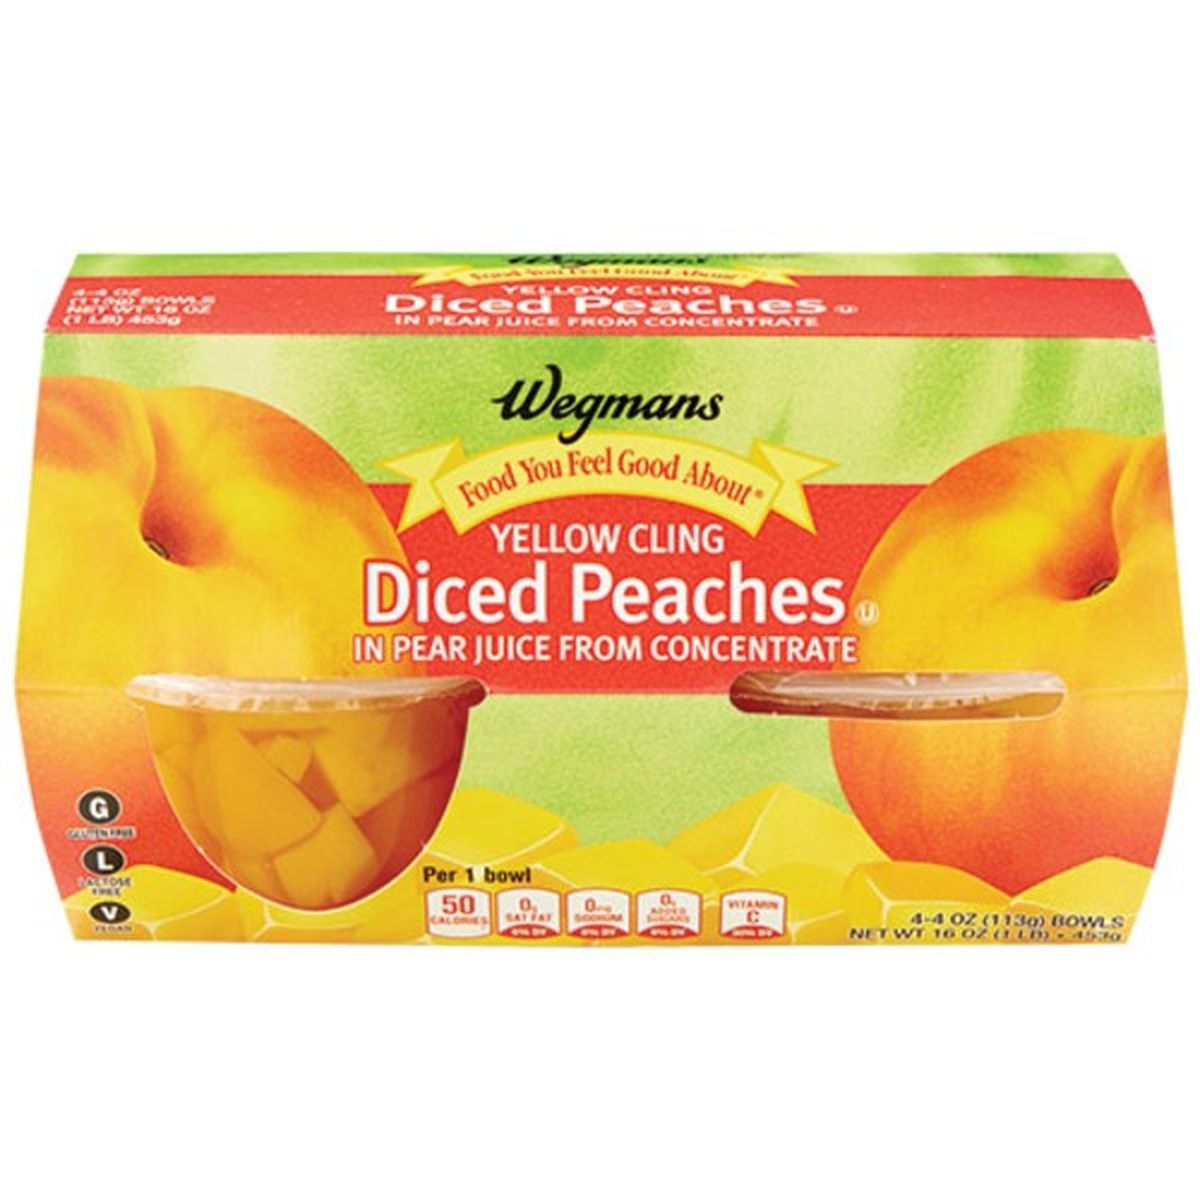 Calories in Wegmans Yellow Cling Diced Peaches